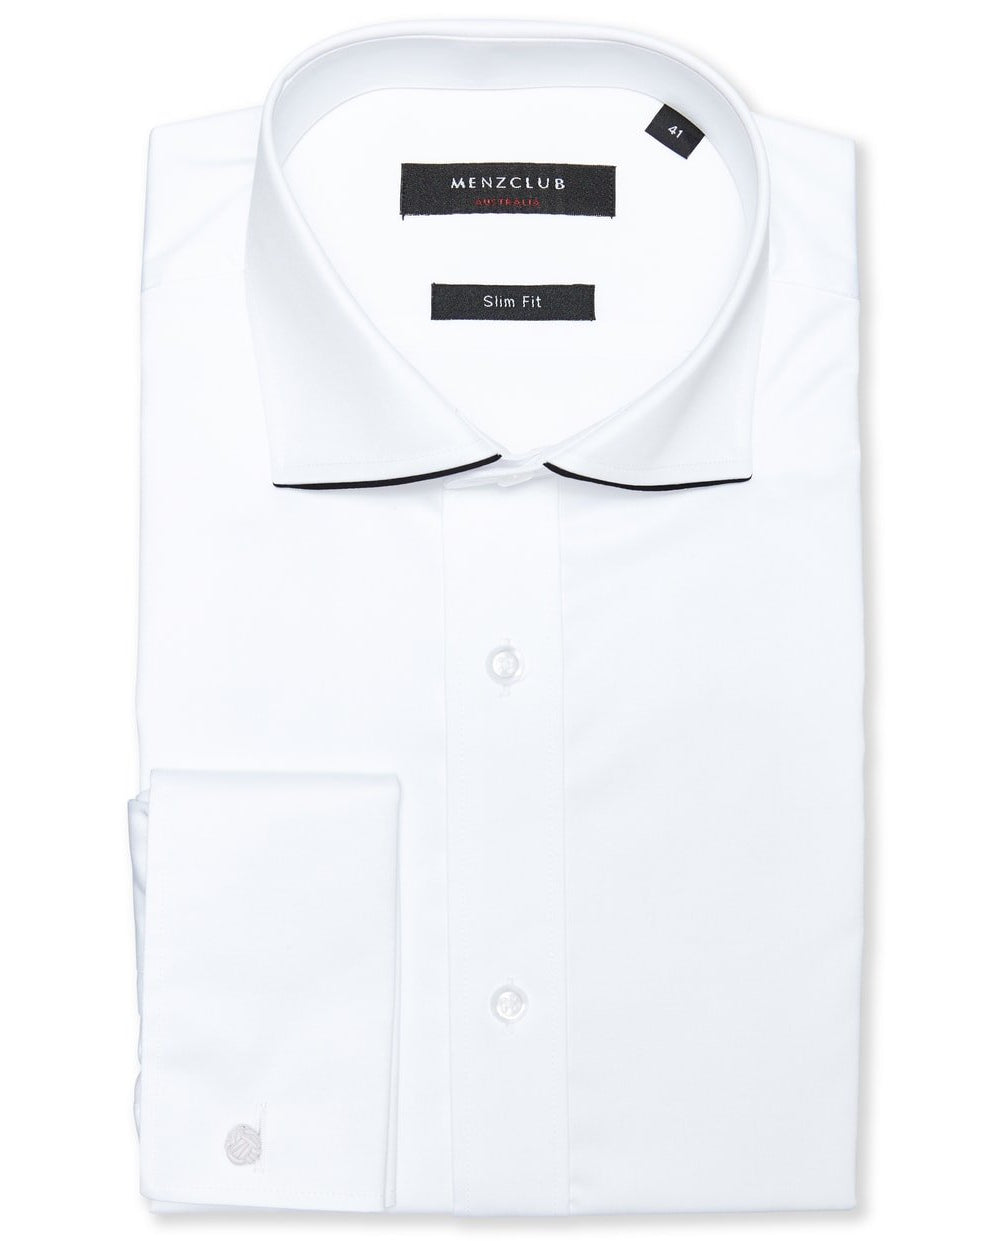 White Shirt with Collar Trim - Men's Formal Shirts at Menzclub